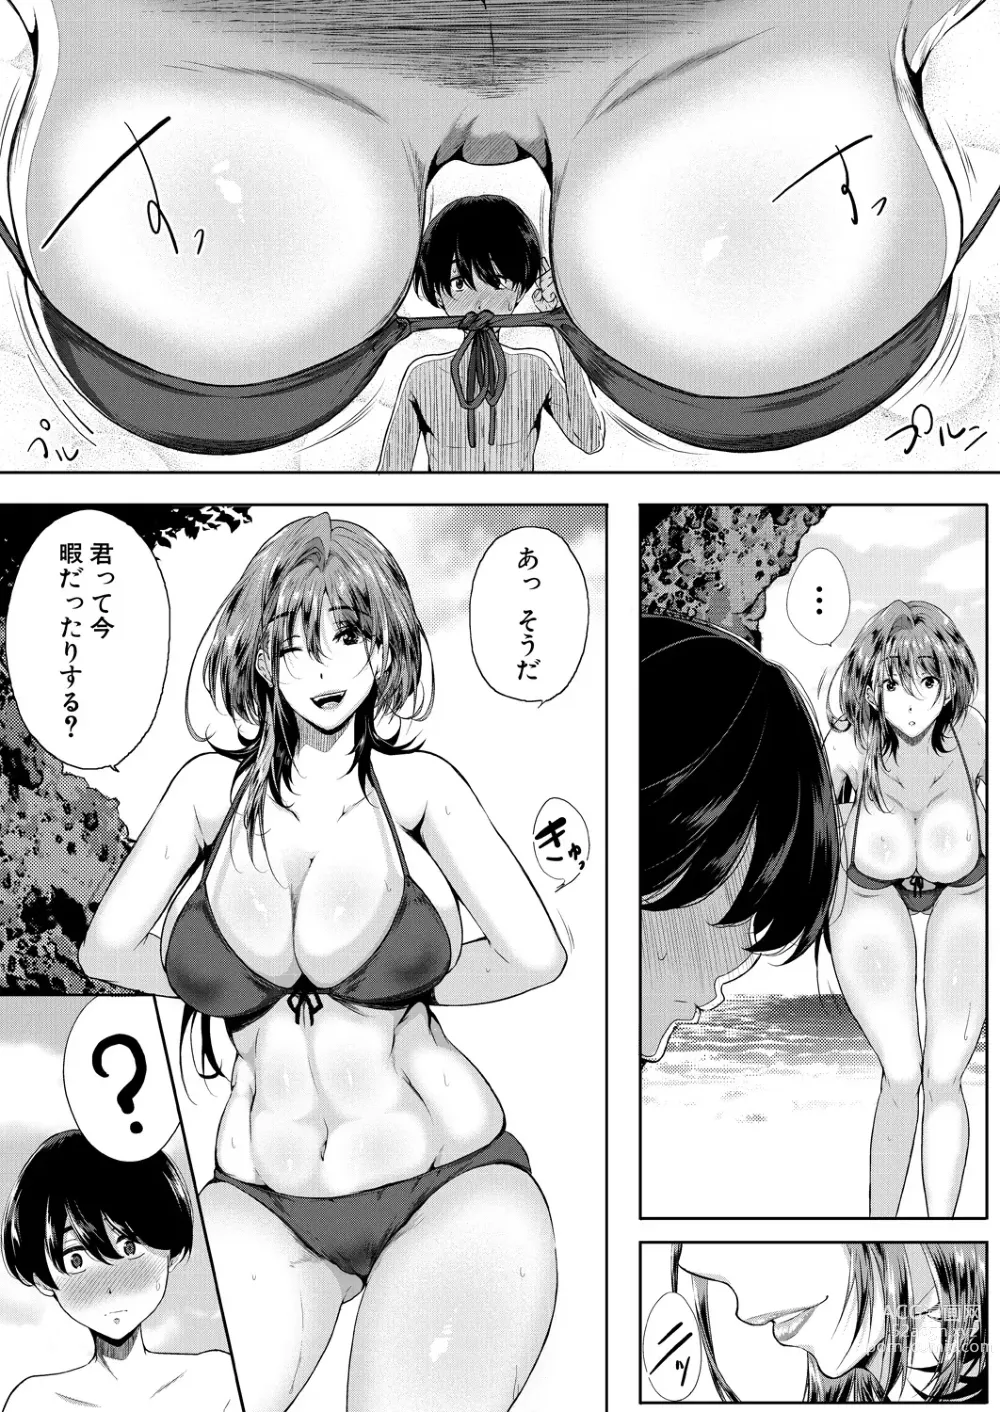 Page 5 of manga Strawberry Mermaid Ch.1-2